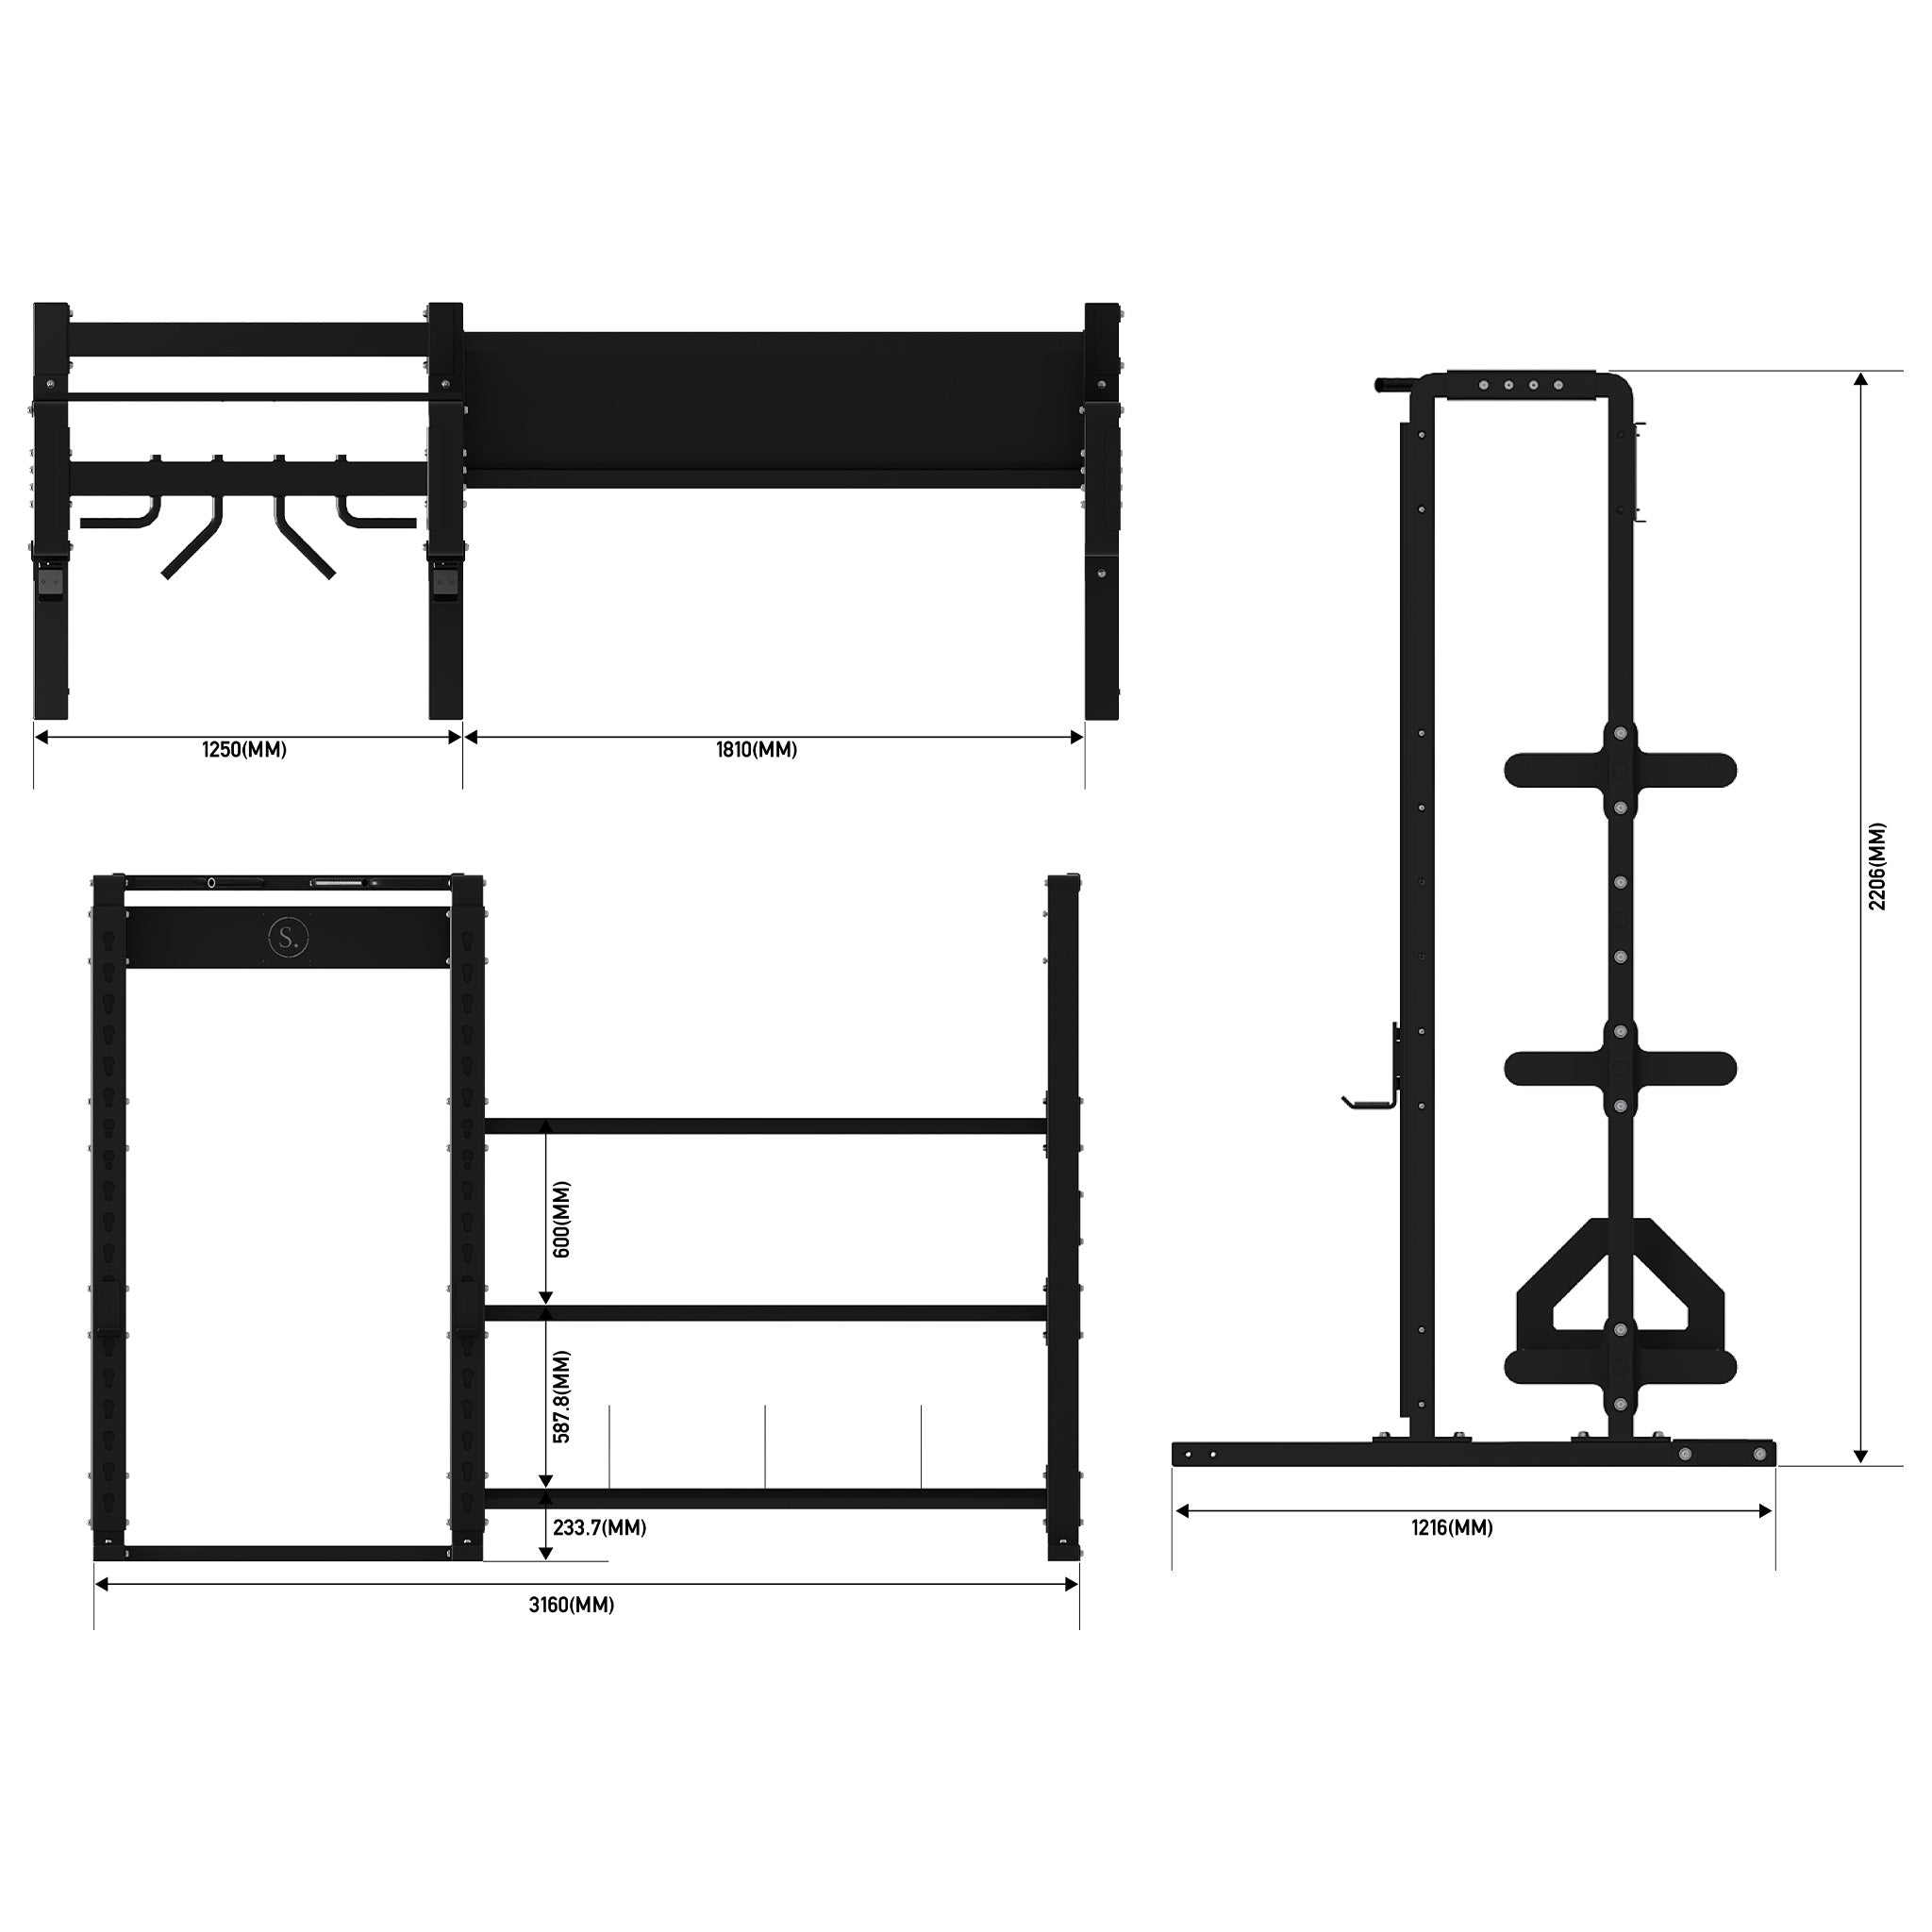 wide storage and half rack dimensions